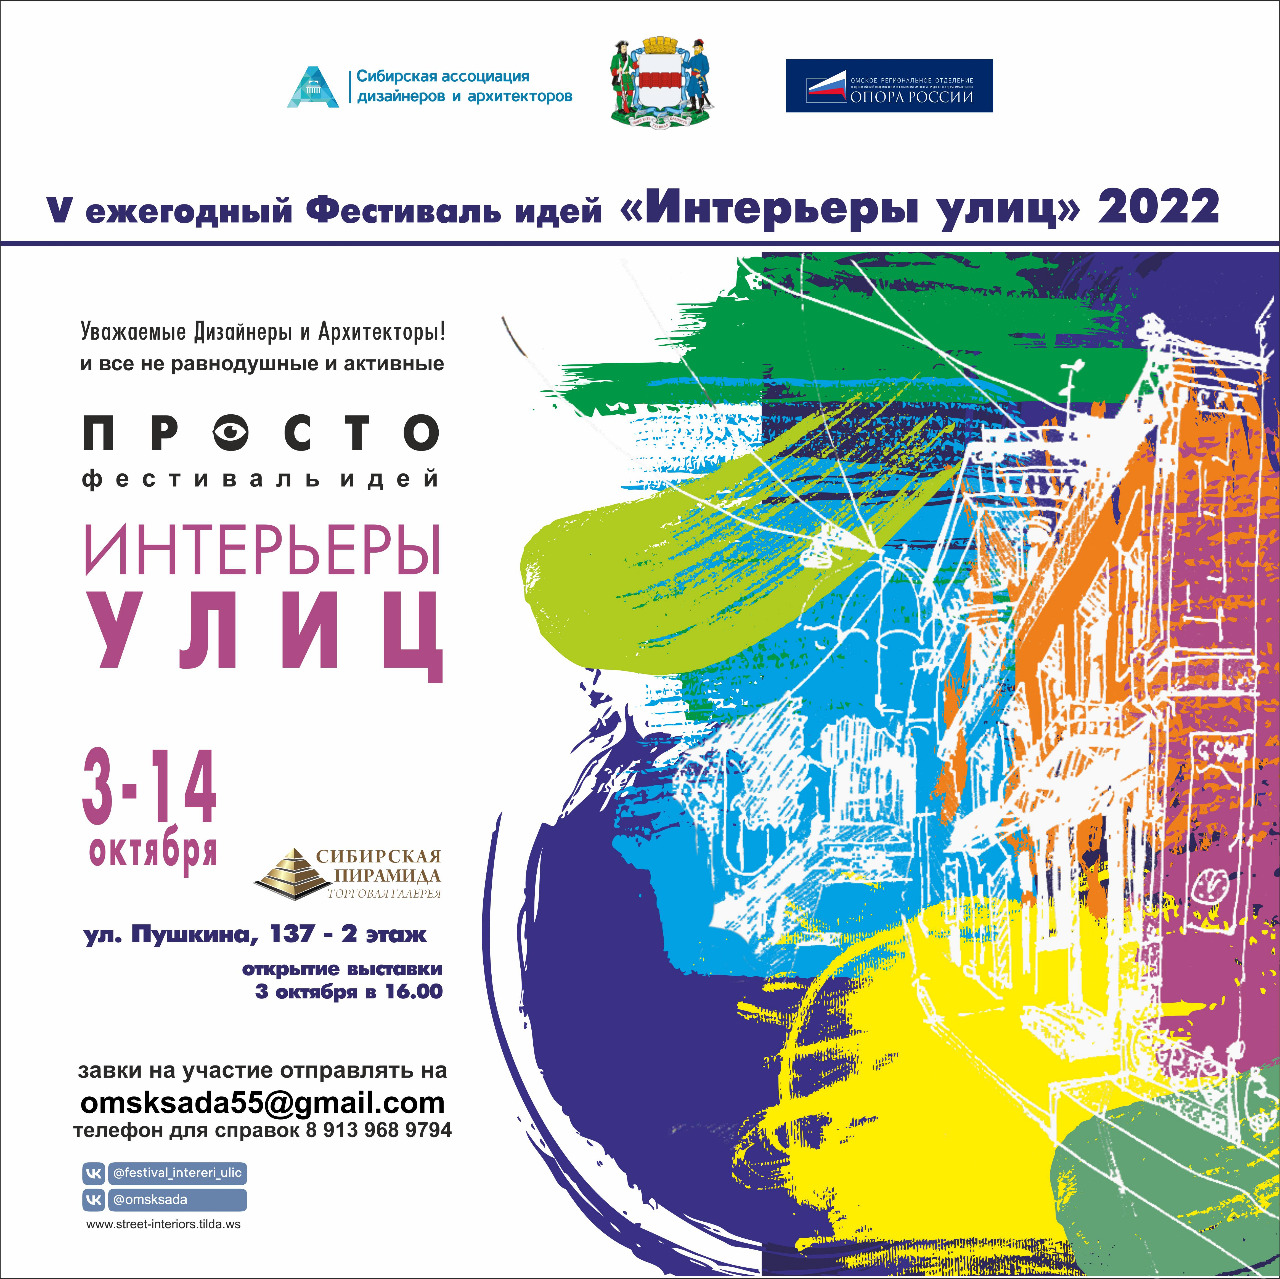 V ежегодный фестиваль идей "Интерьеры улиц" 2022